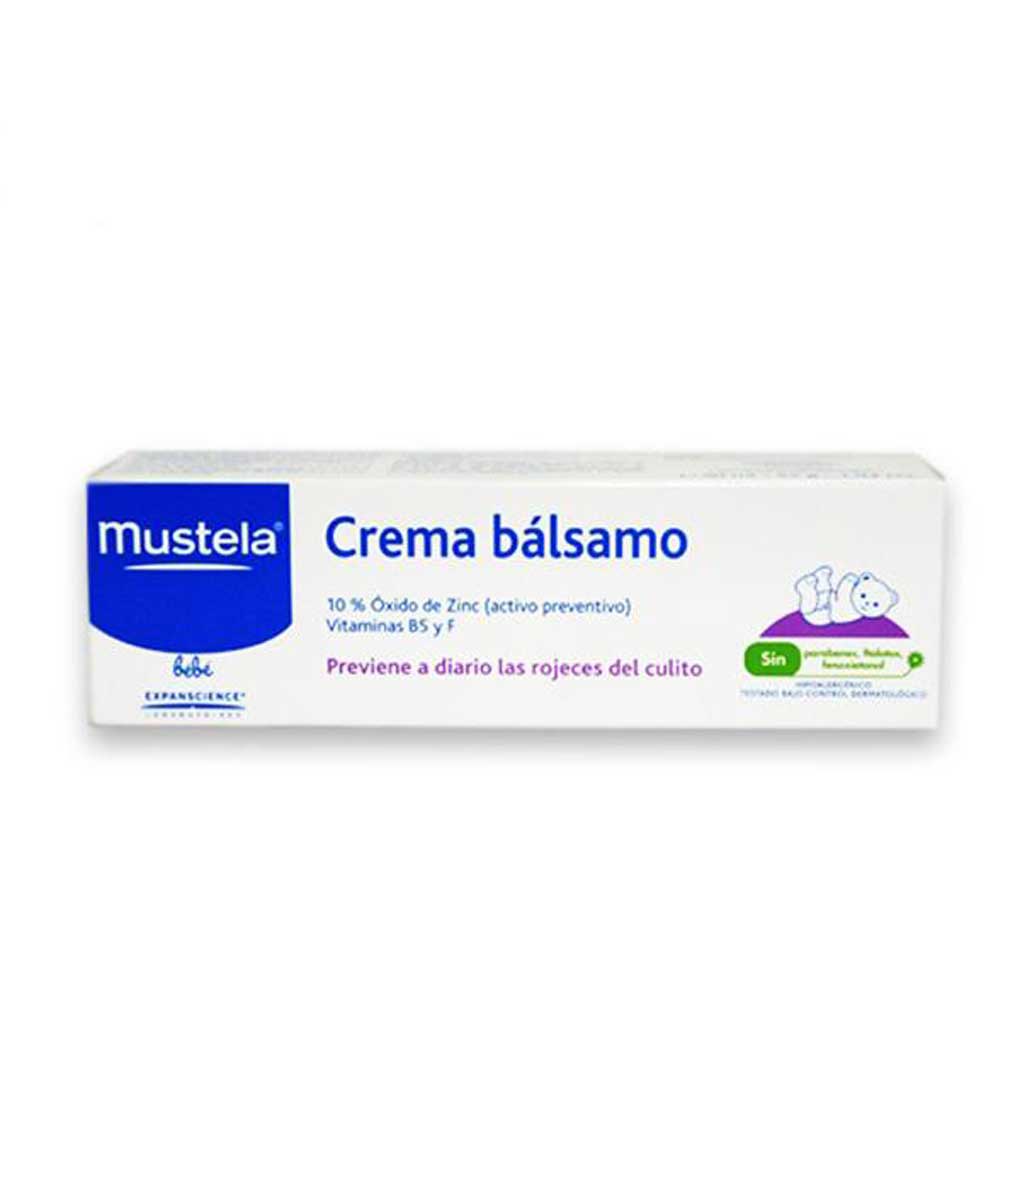 Foto Crema balsamo mustela 100 ml